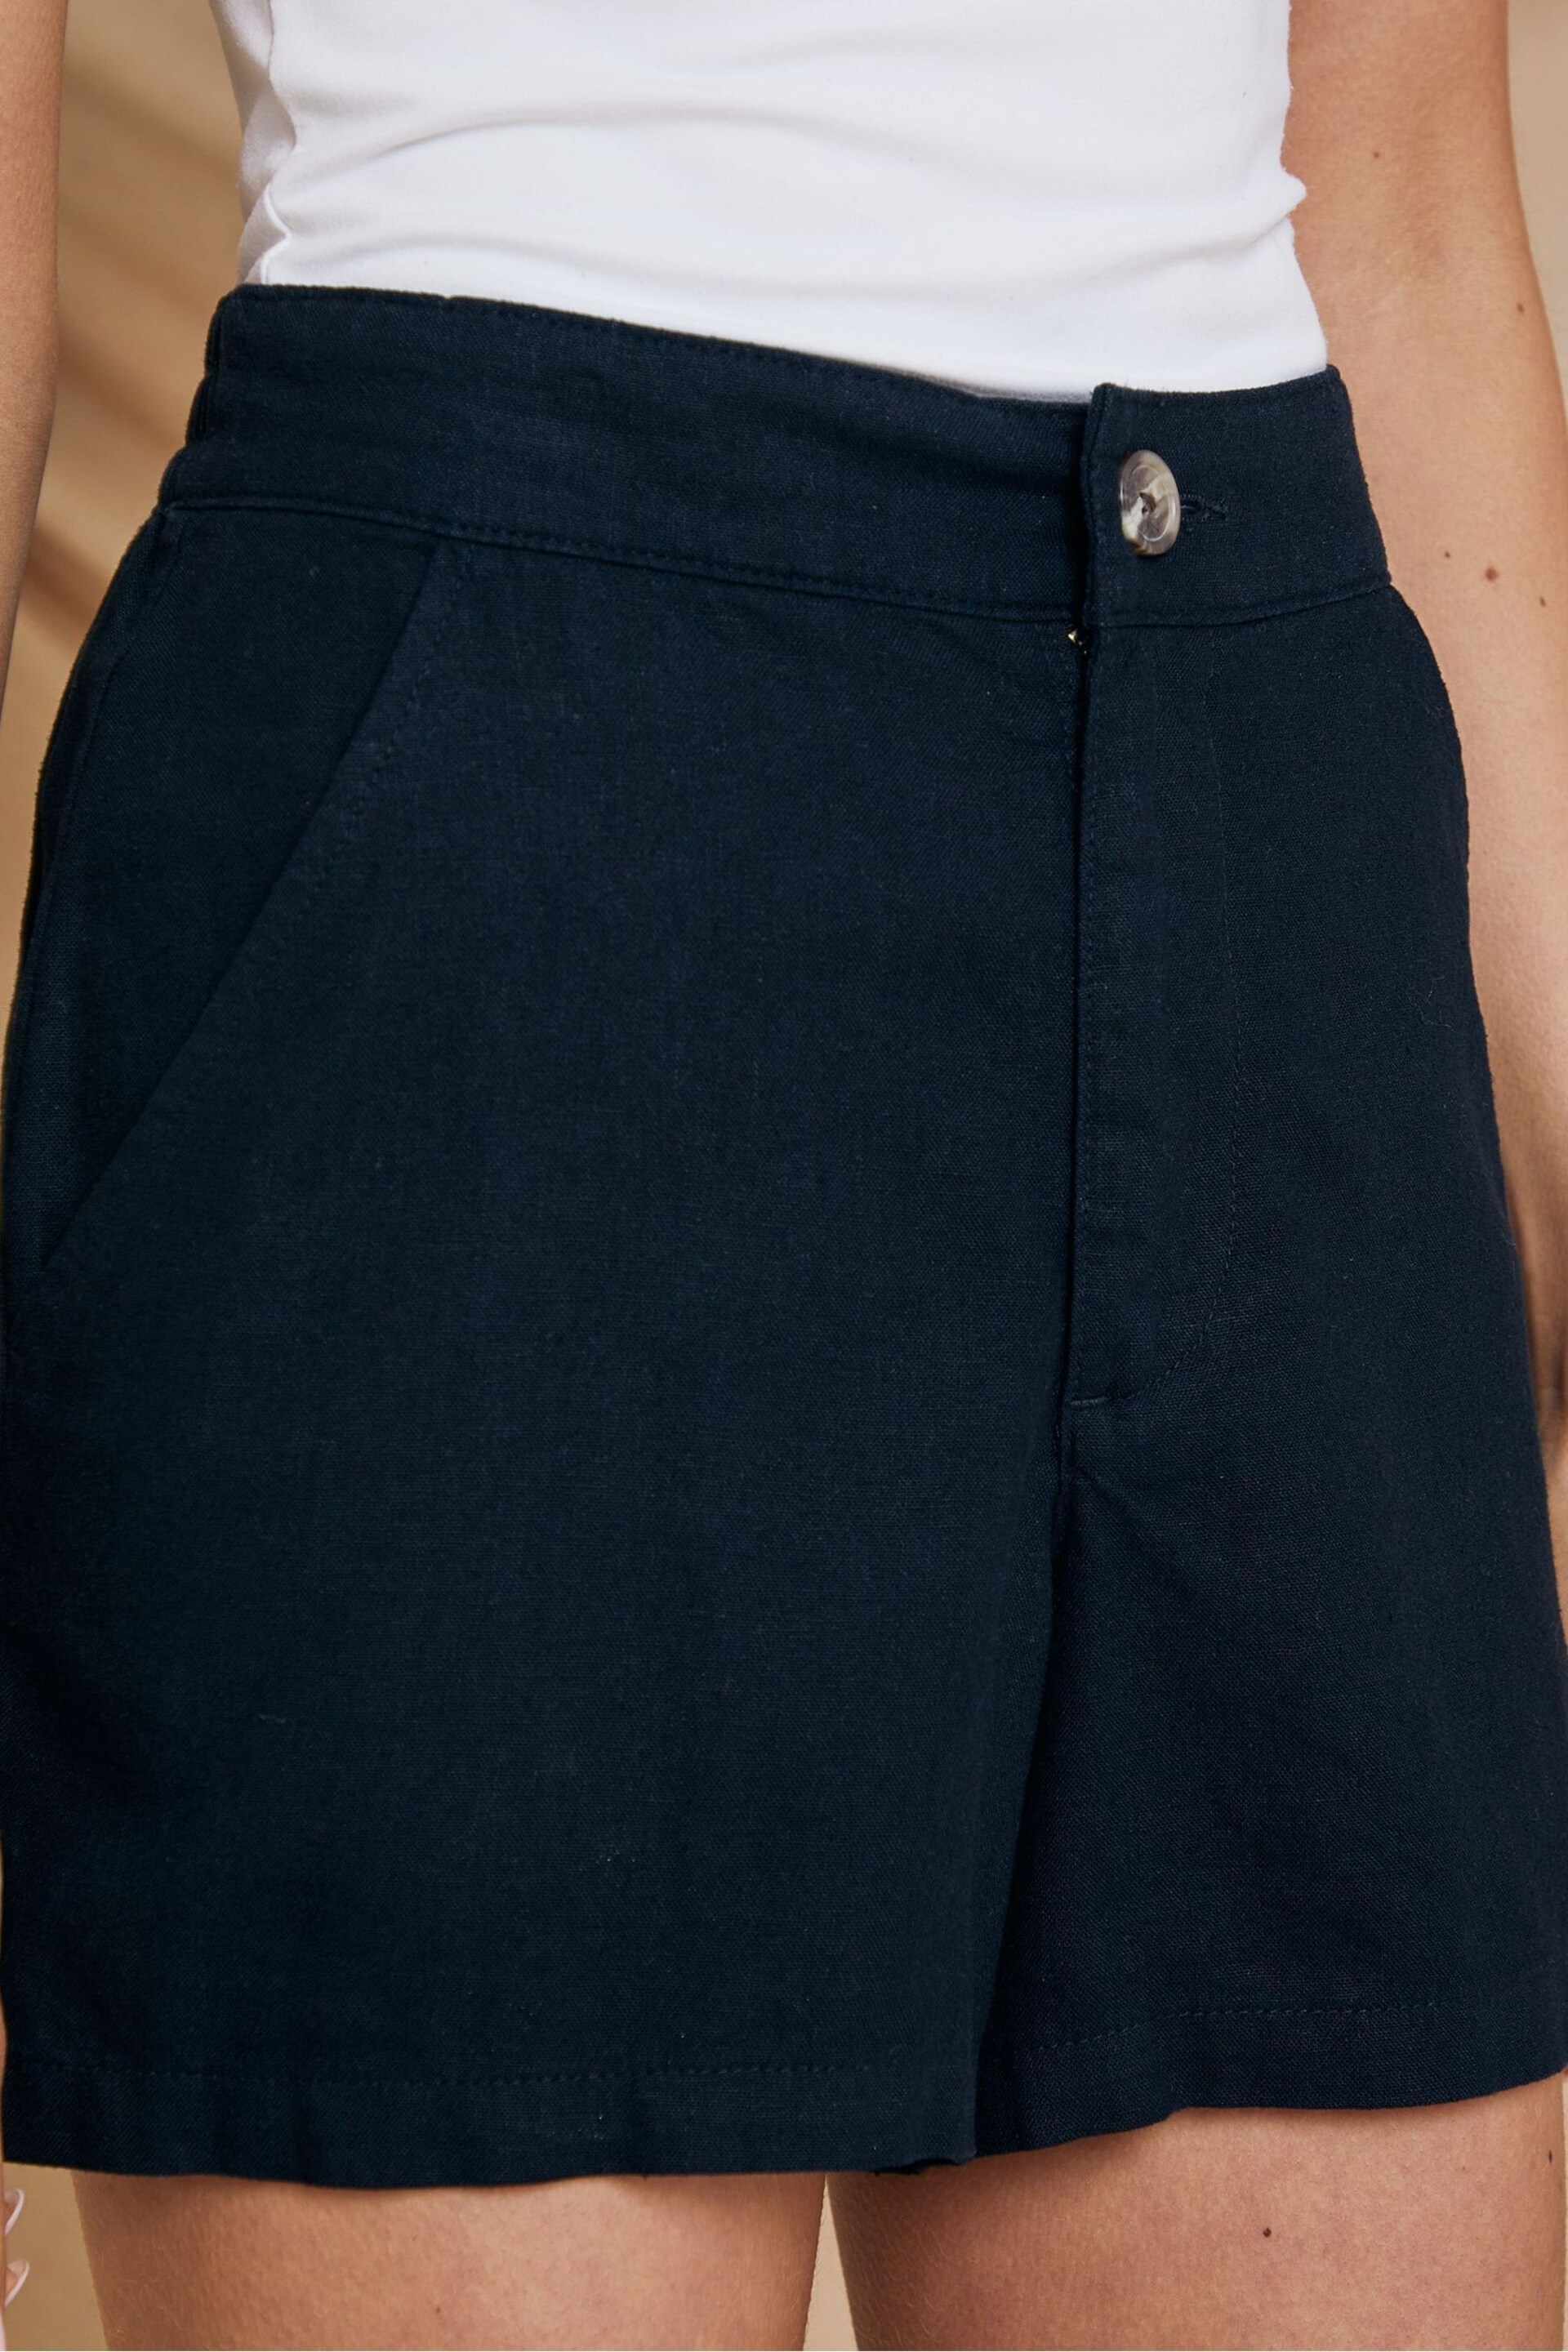 Threadbare Black Linen Blend Shorts - Image 4 of 4